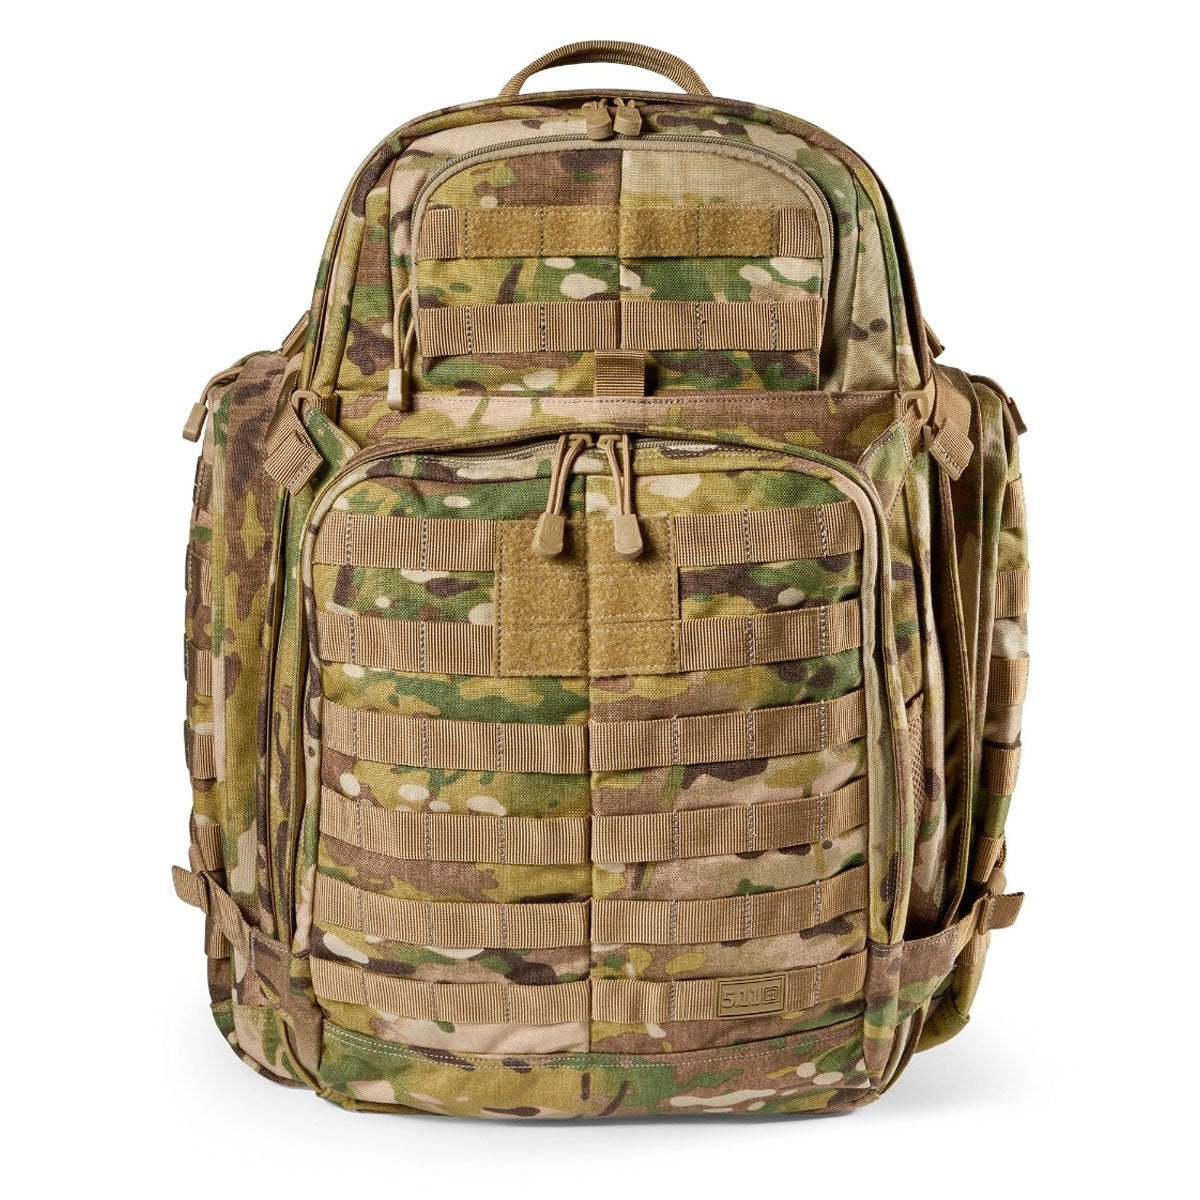 5.11 Tactical Rush 72 Backpack 2.0 Multicam Bags, Packs and Cases 5.11 Tactical Tactical Gear Supplier Tactical Distributors Australia